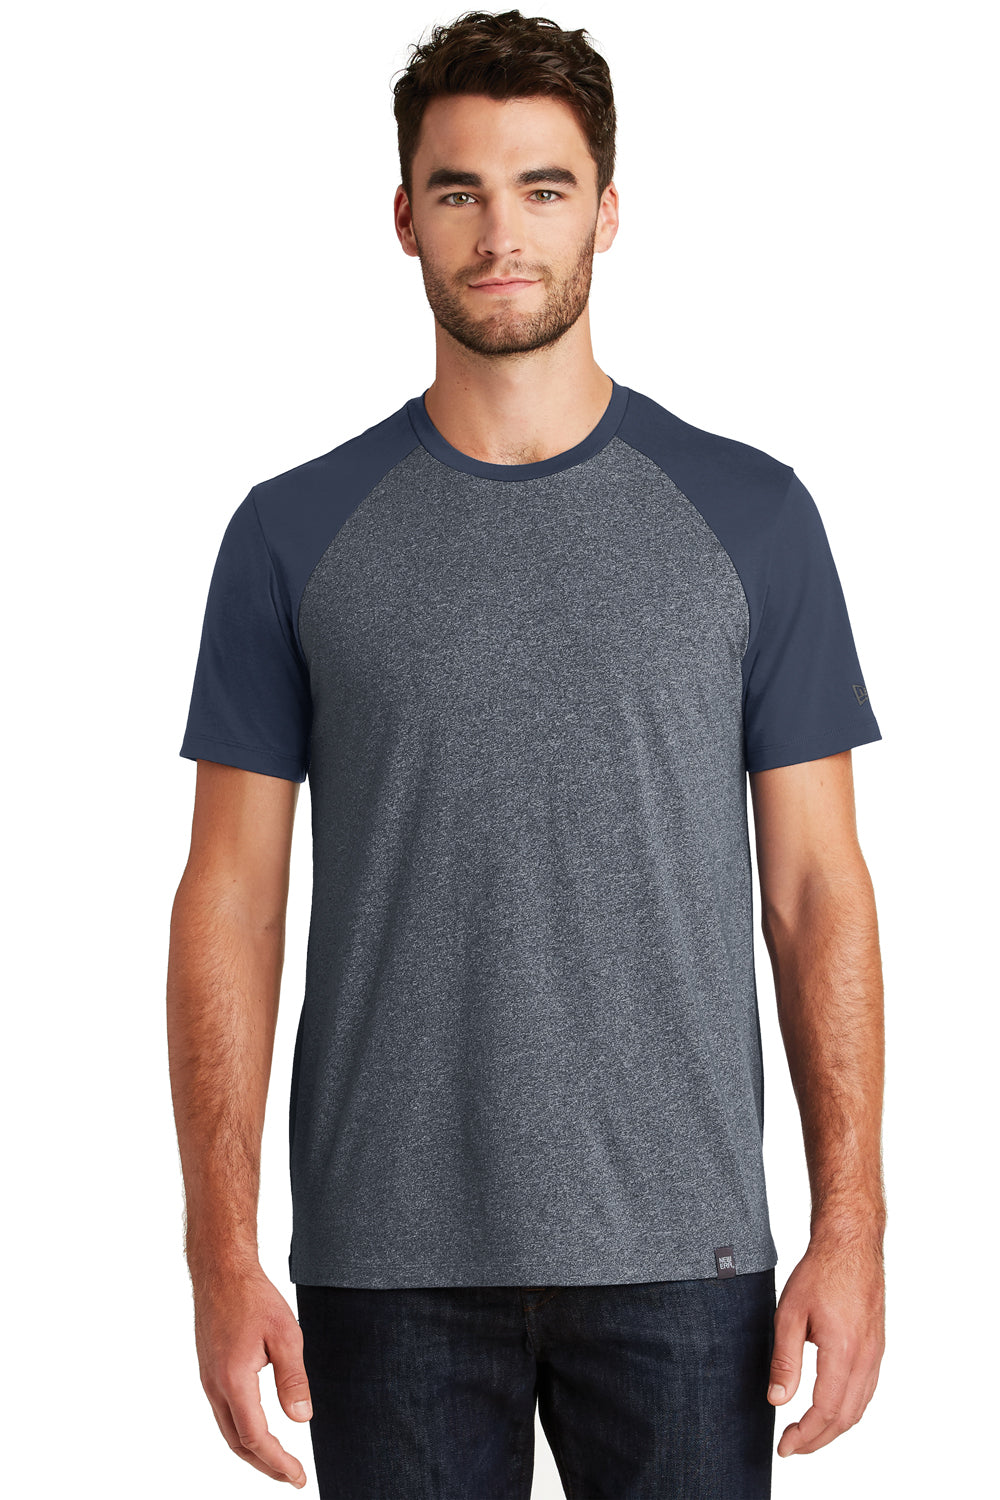 New Era NEA107 Mens Heritage Short Sleeve Crewneck T-Shirt Navy Blue/Navy Blue Twist Front